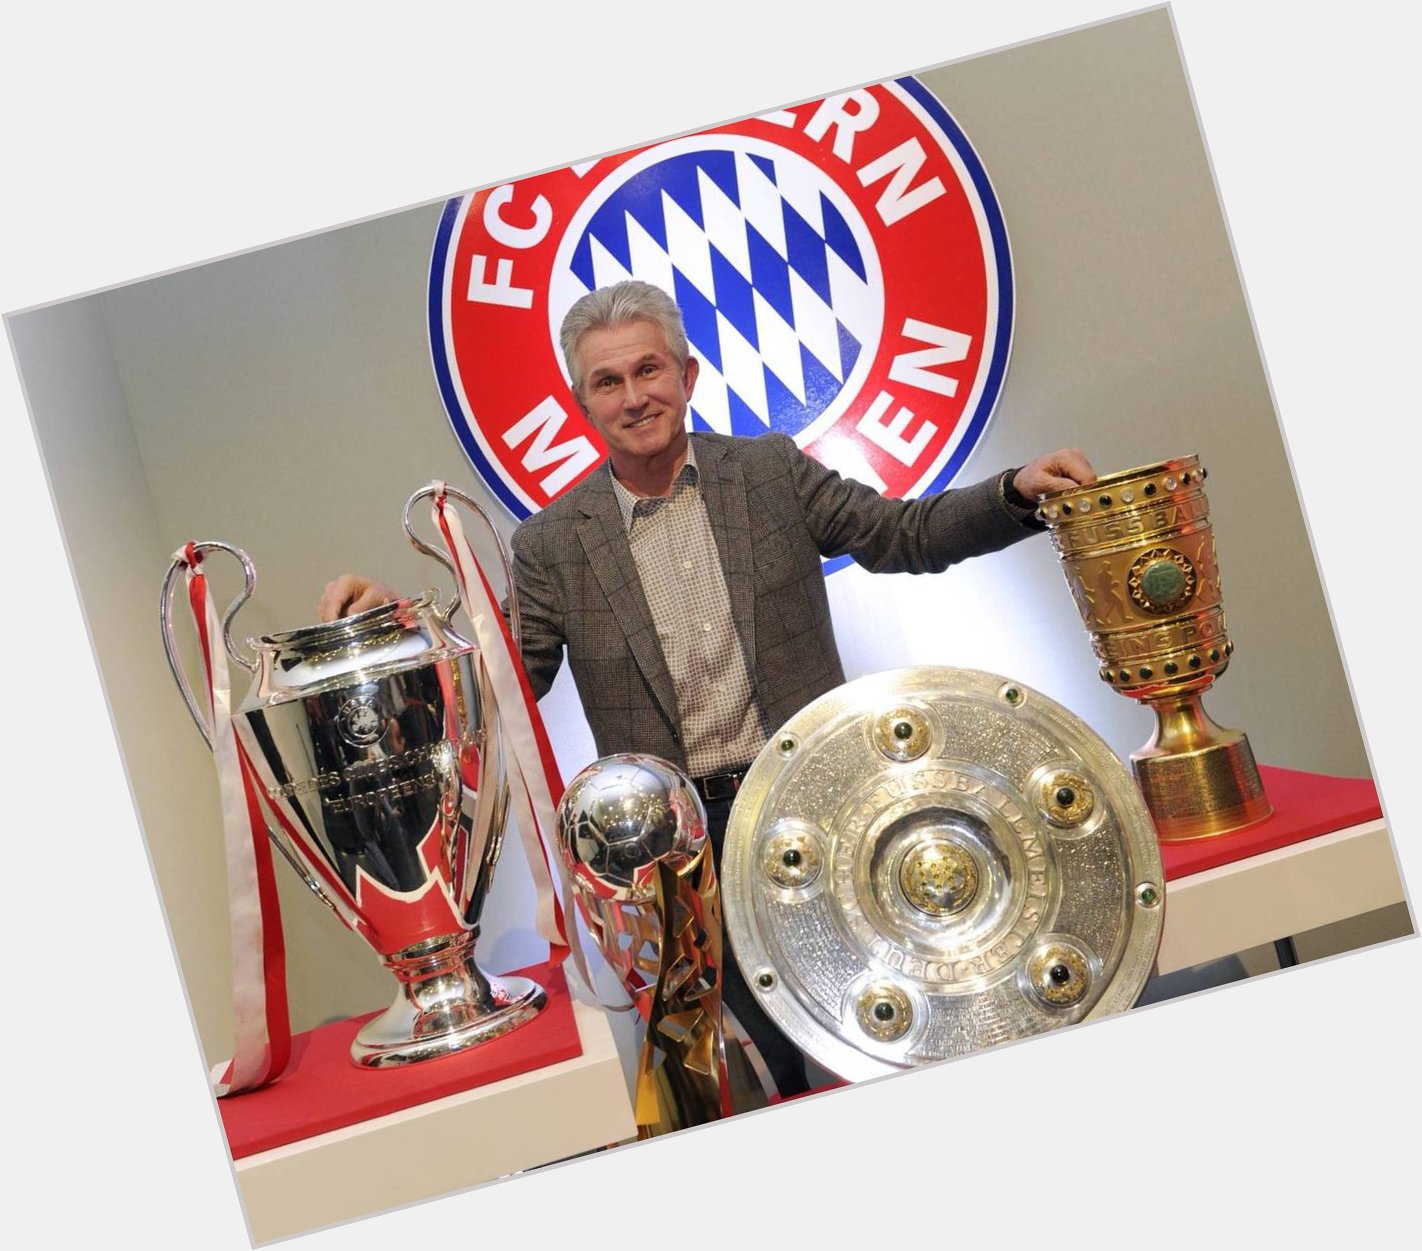 Happy birthday to Bayern legendary coach Jupp Heynckes, who turns 78 today!    